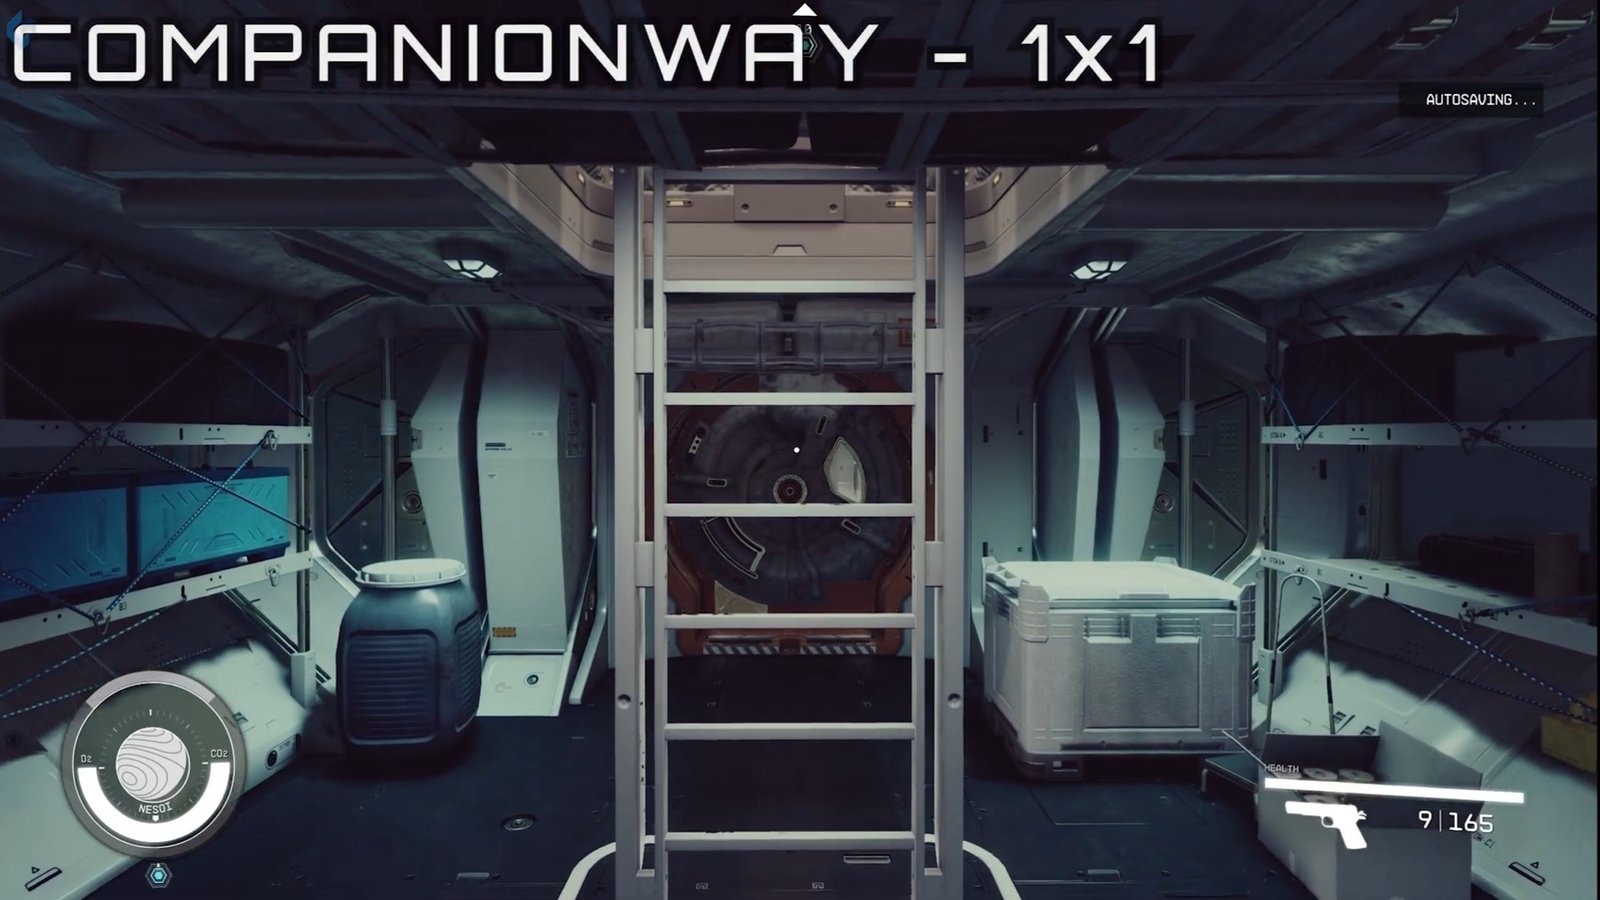 Companionway 1x1 modules in Starfield